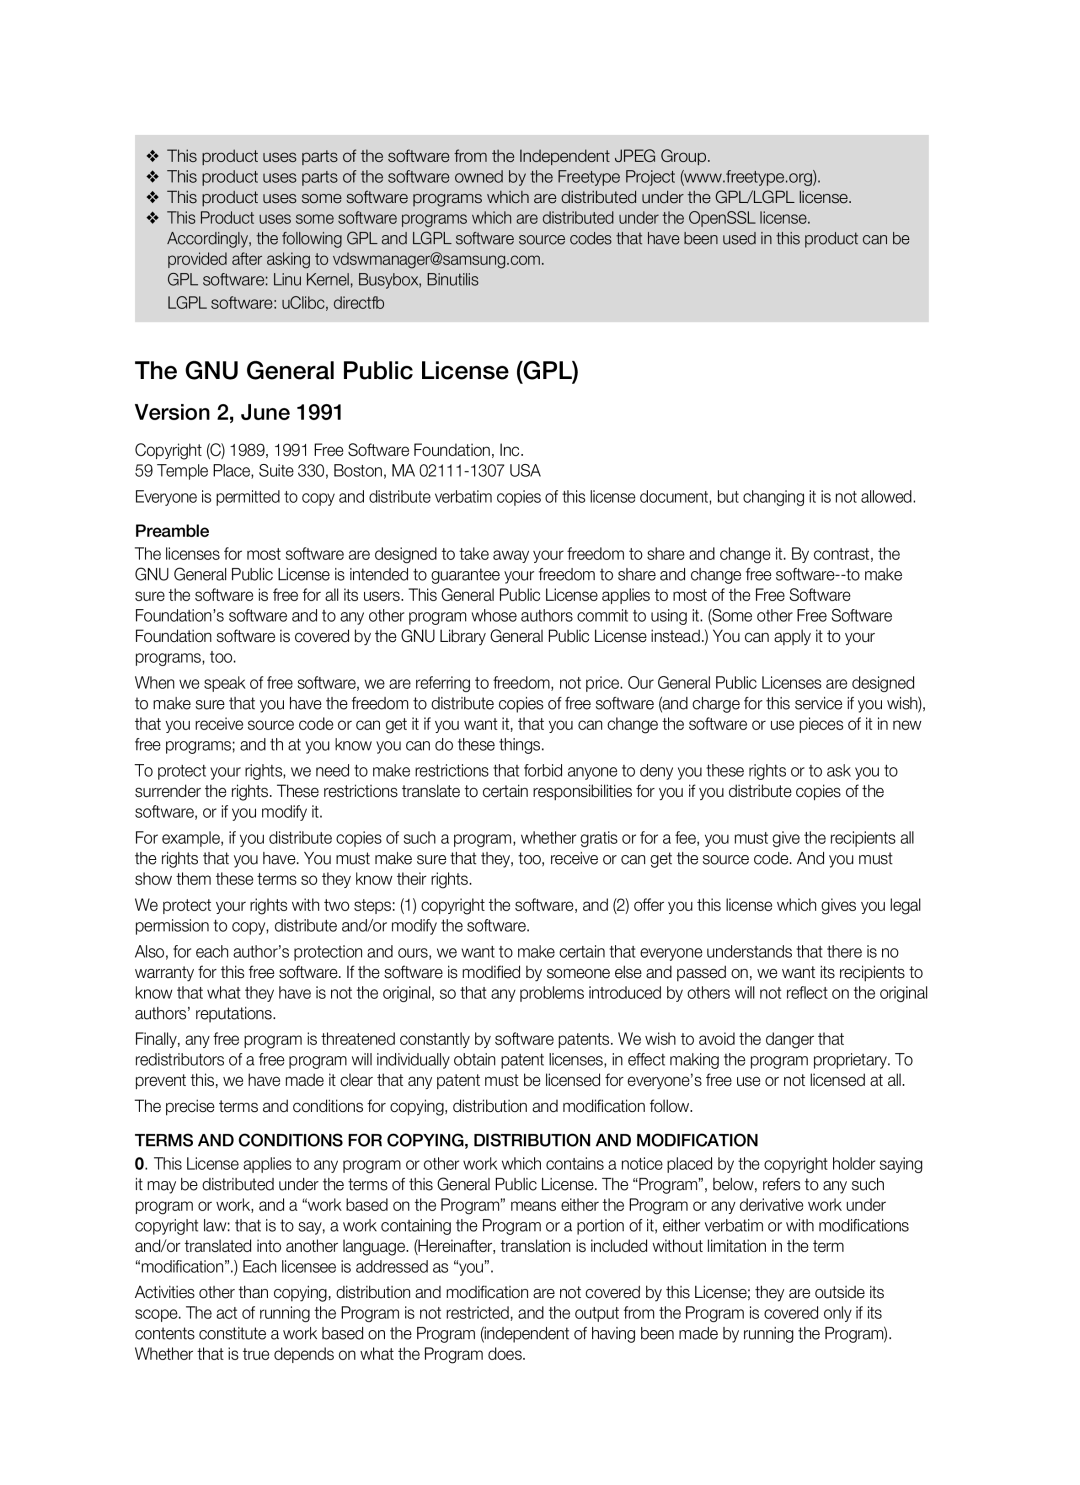 Samsung AH68-02178Z, HT-BD1200 user manual The GNU General Public License GPL, Version 2, June 